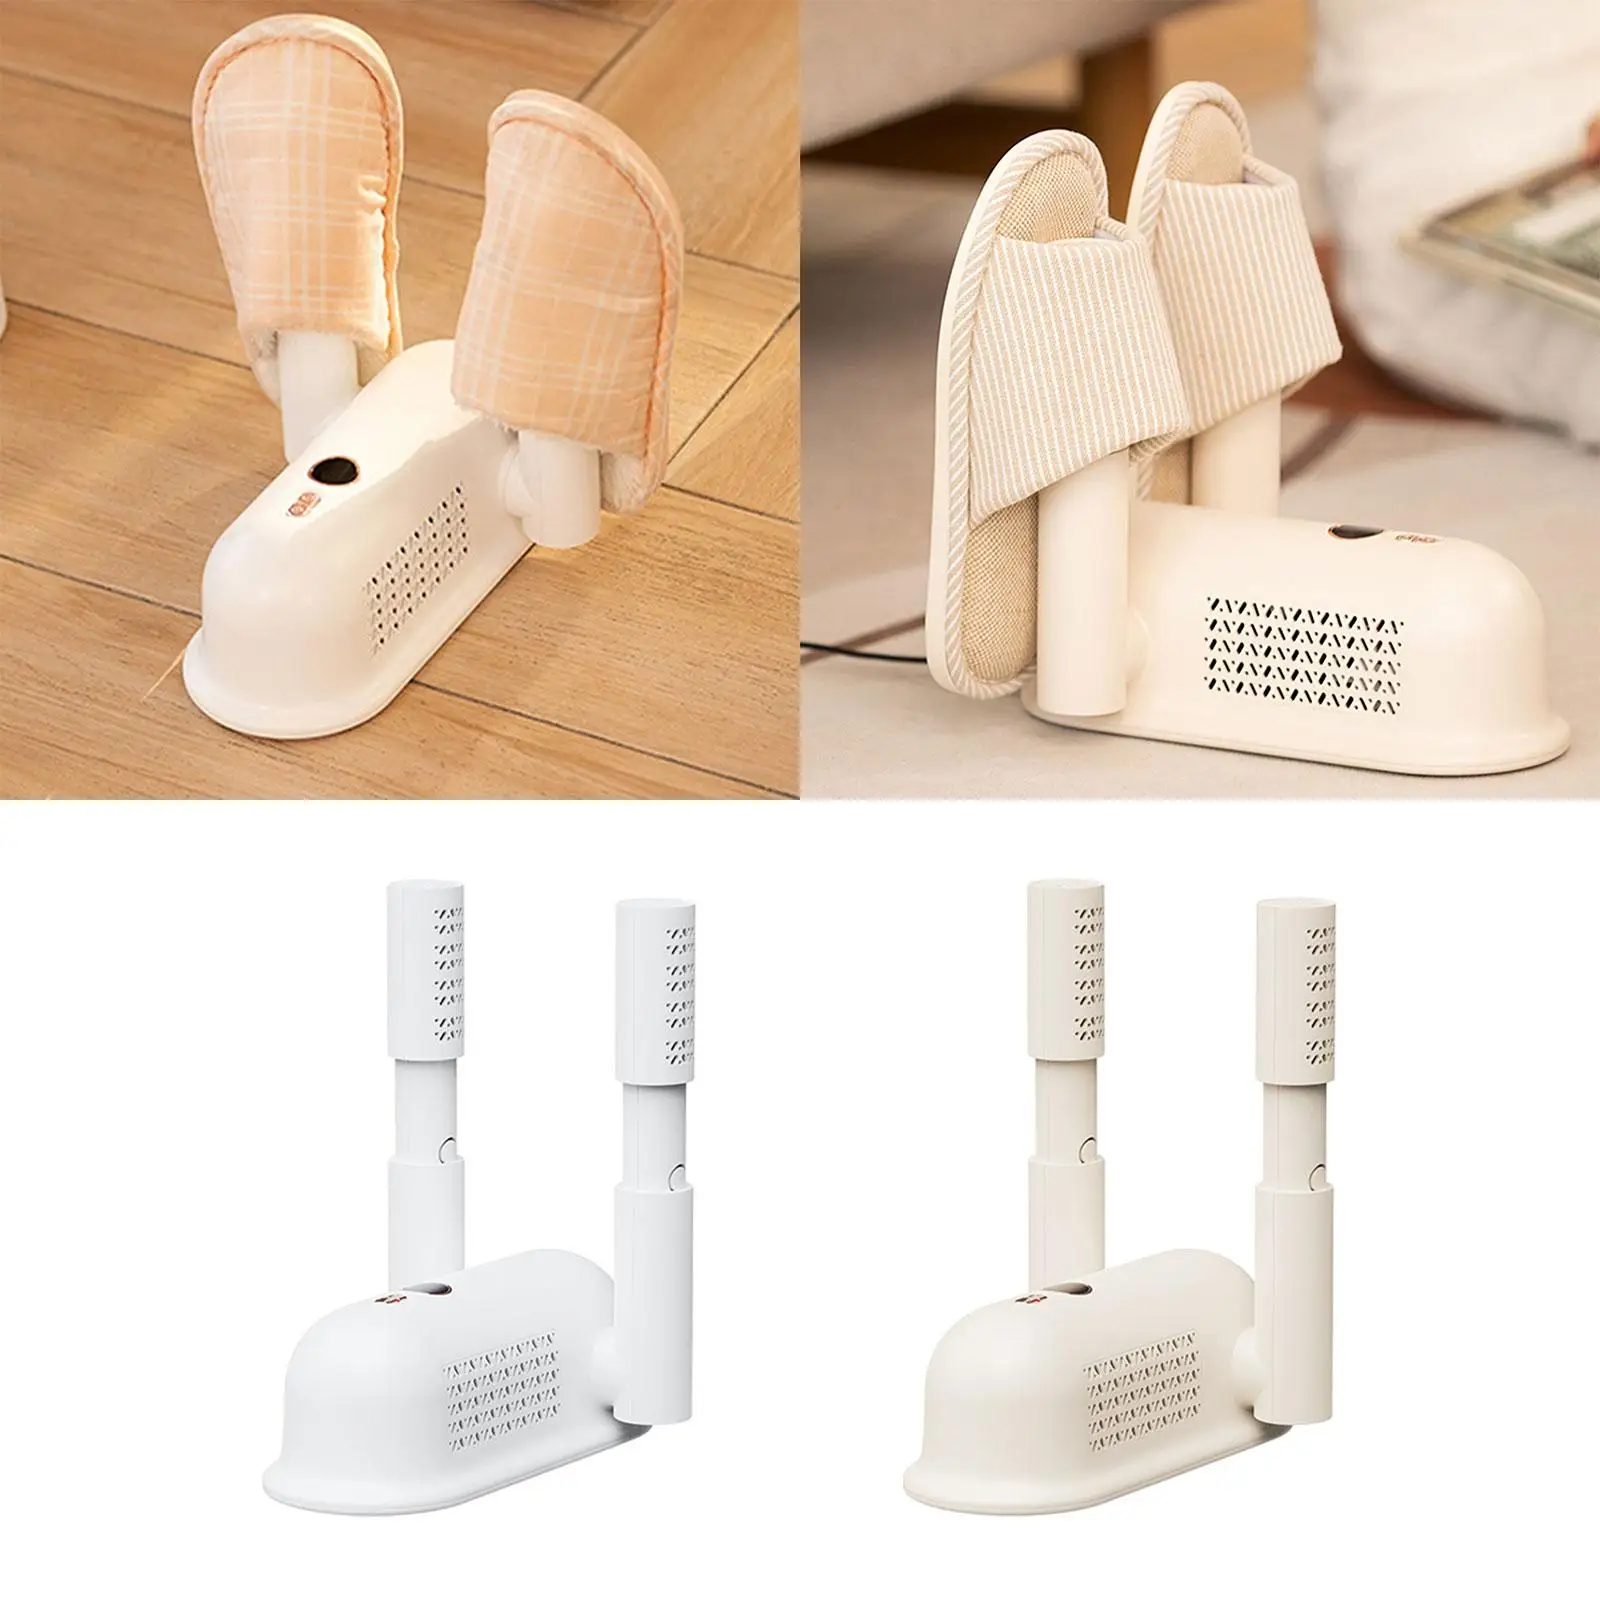 Household Shoe Dryer Footwears Heater Folding Low Noise Fast Heating Portable Glove Dryer for Socks Gloves Slippers Hotel Office